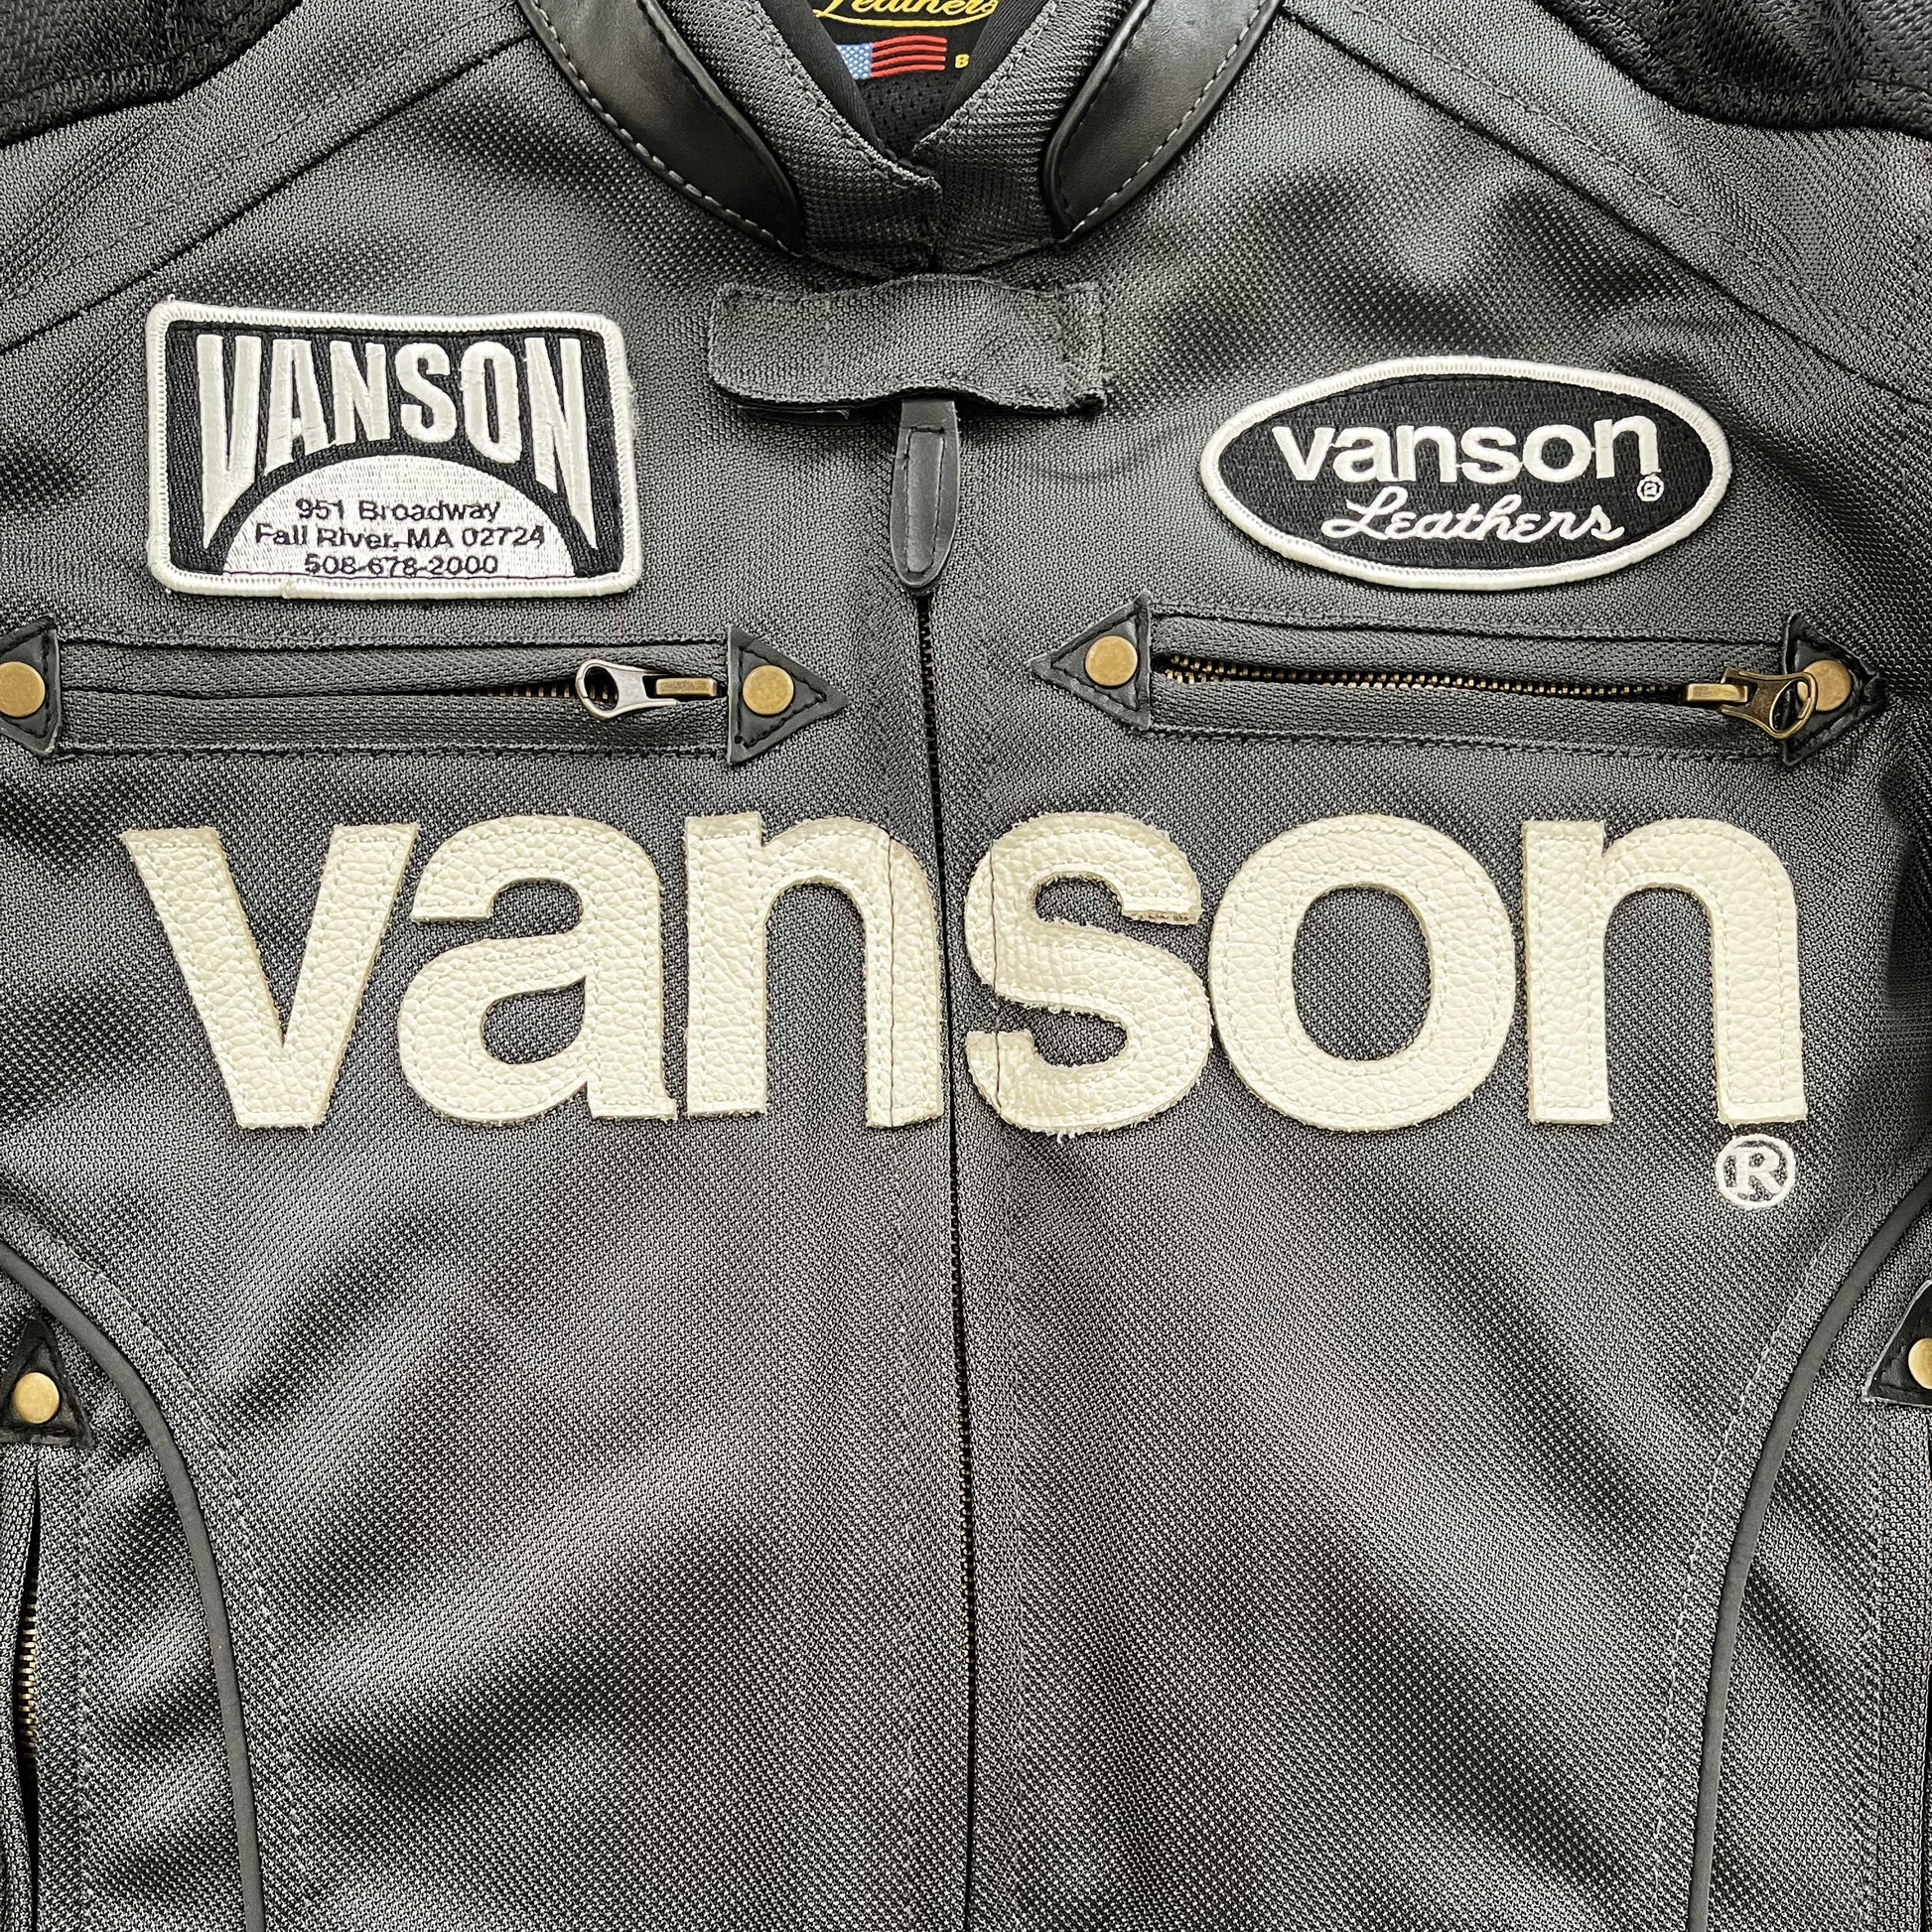 Vanson Leathers Motorcycle Mesh Racer Jacket